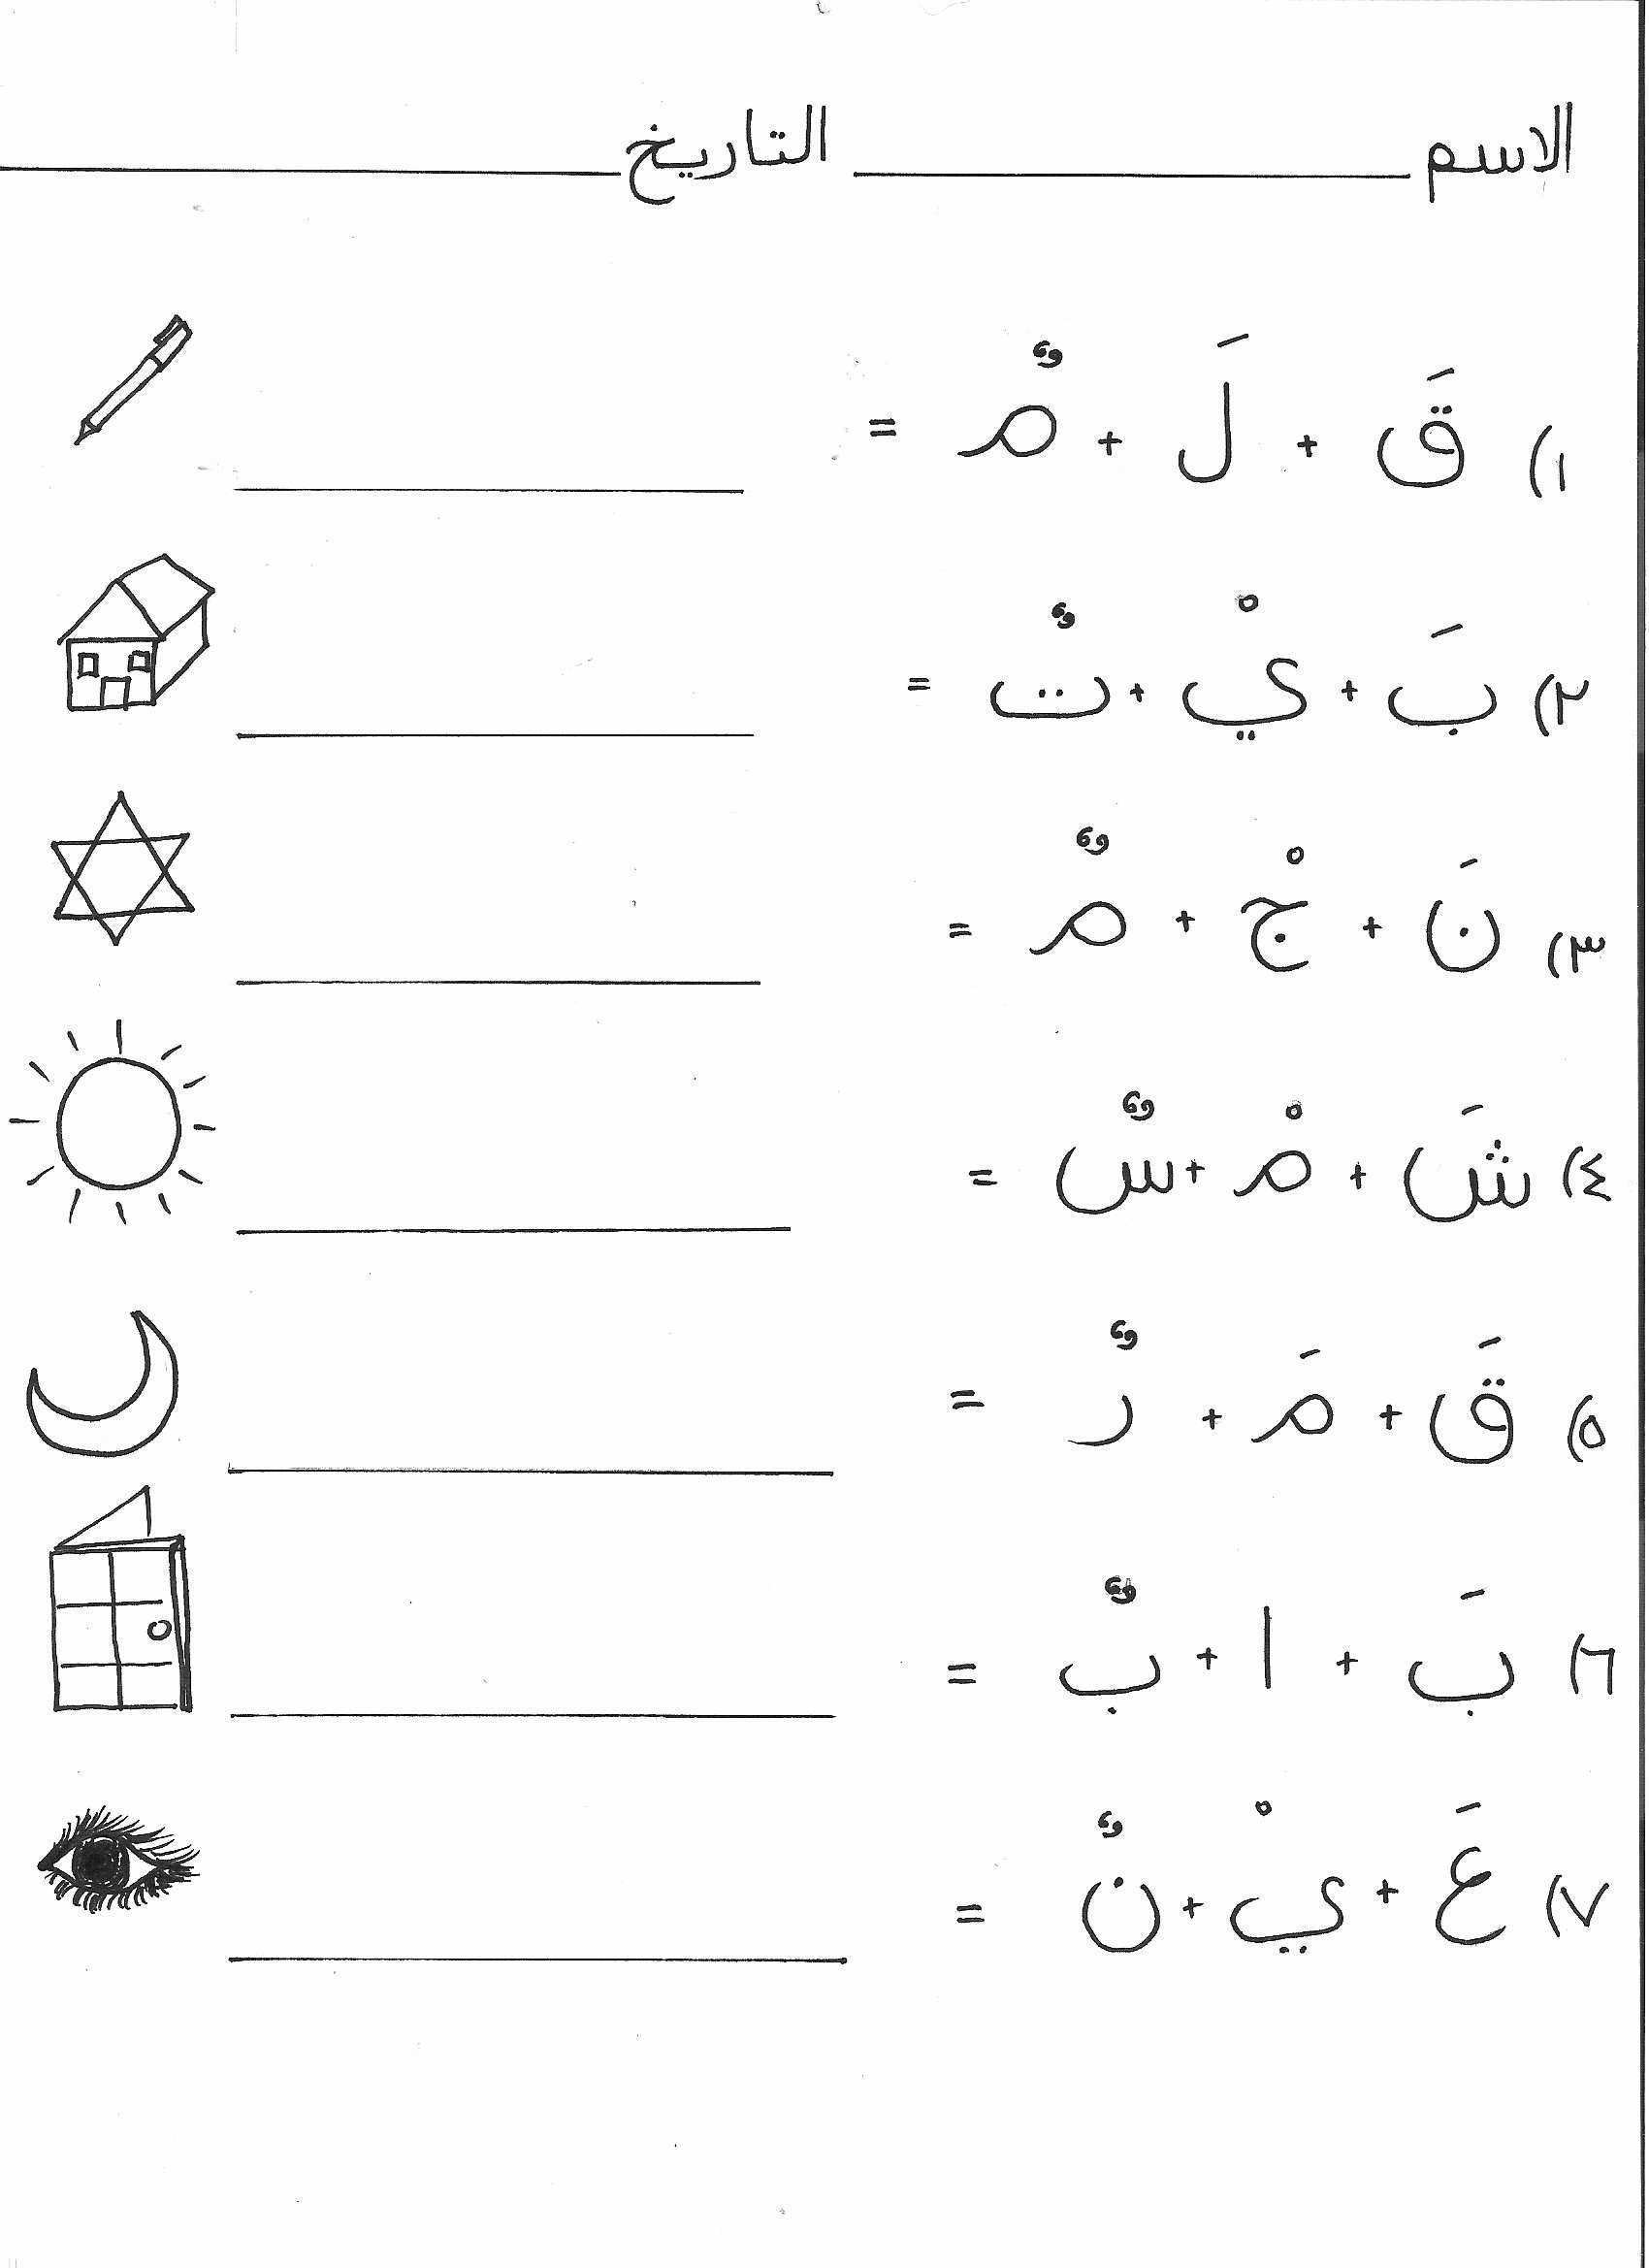 Arabic Alphabet Worksheets Printable Inspirational Arabic Alphabet Worksheet Most Of the Letters Were Done Arabic